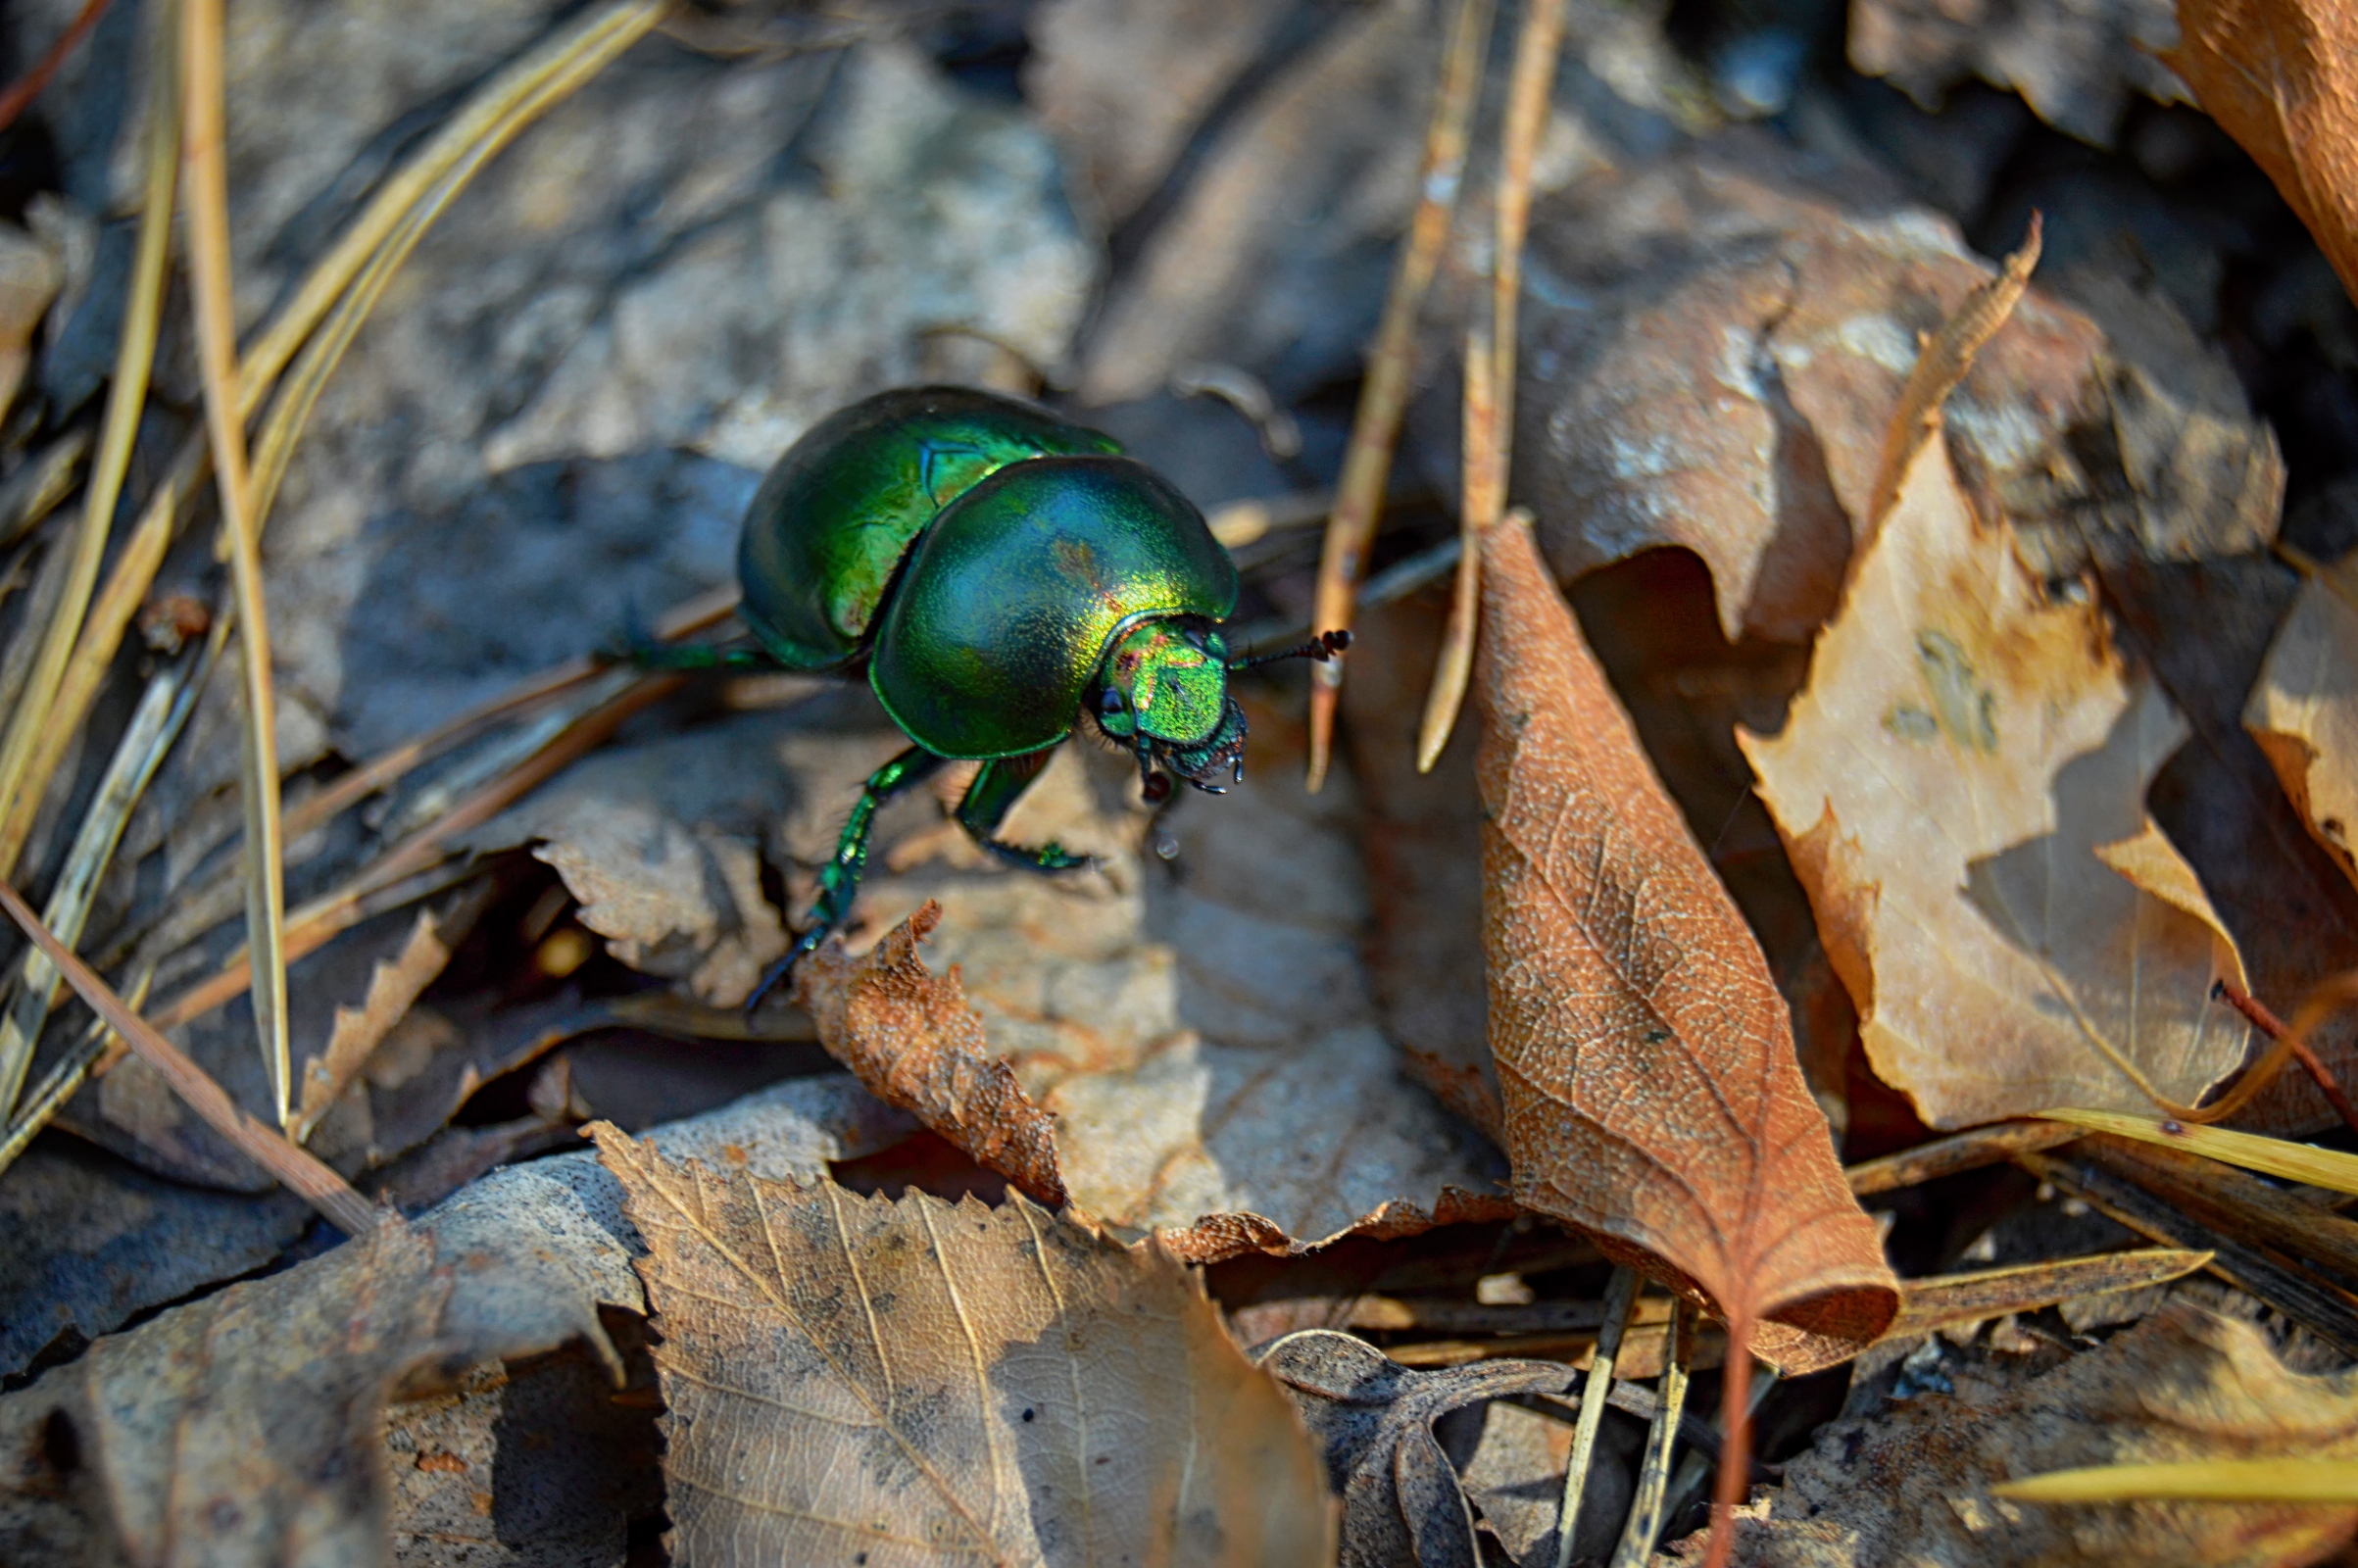 Green dor-beetle on fallen leaves photo